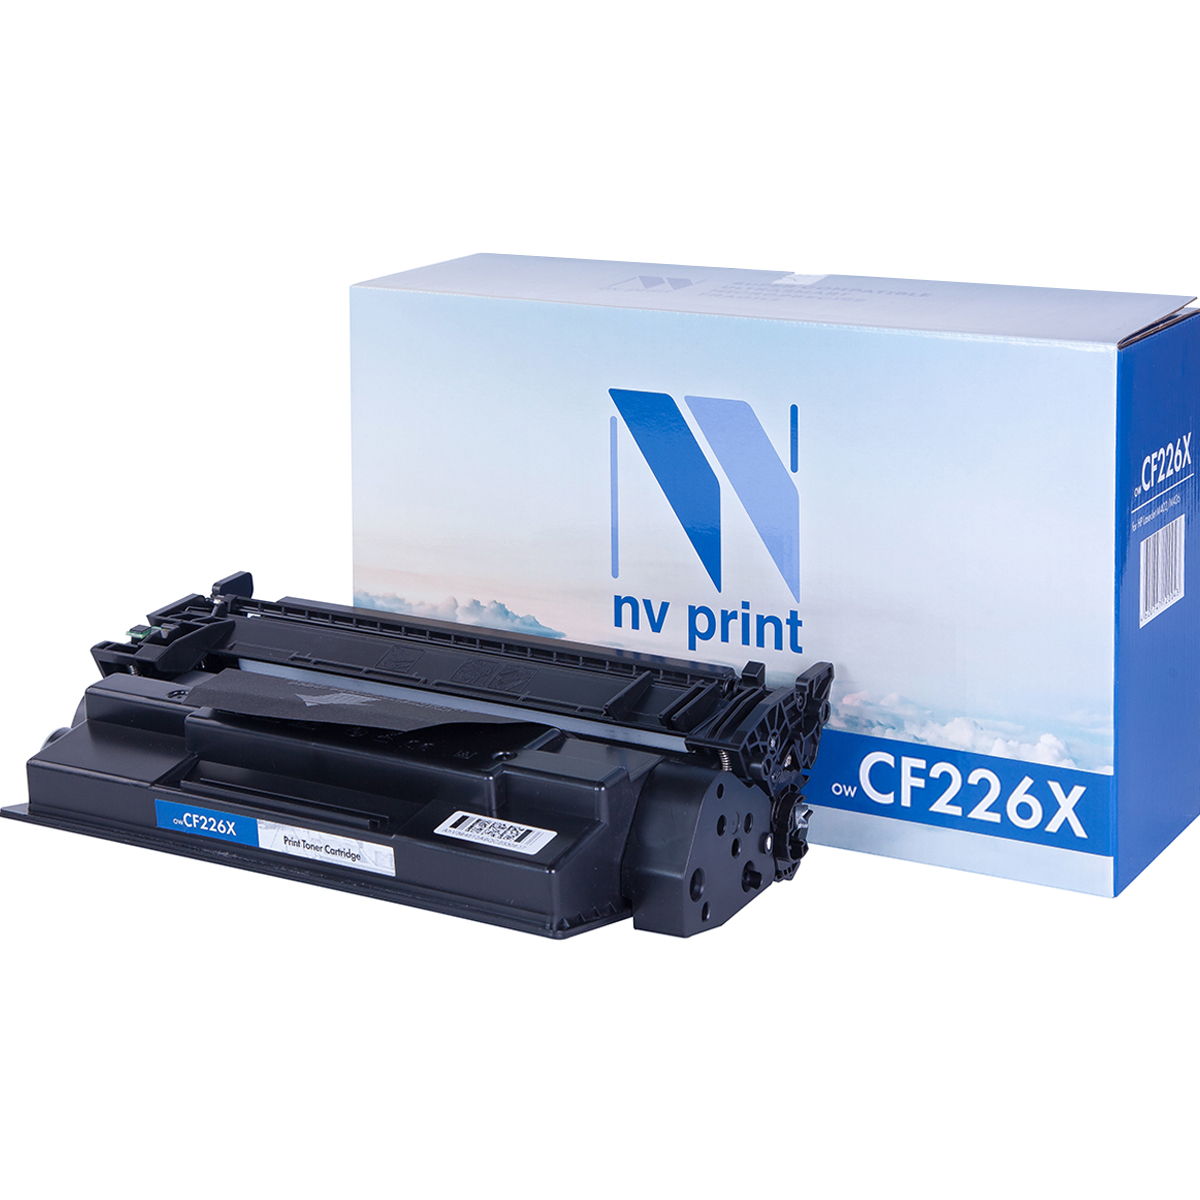   NV Print NV-CF226X (HP LaserJet Pro M402d, M402dn, M402dne, M402dw, M402n, M426dw, M426fdn, M426fdw, 9000.)